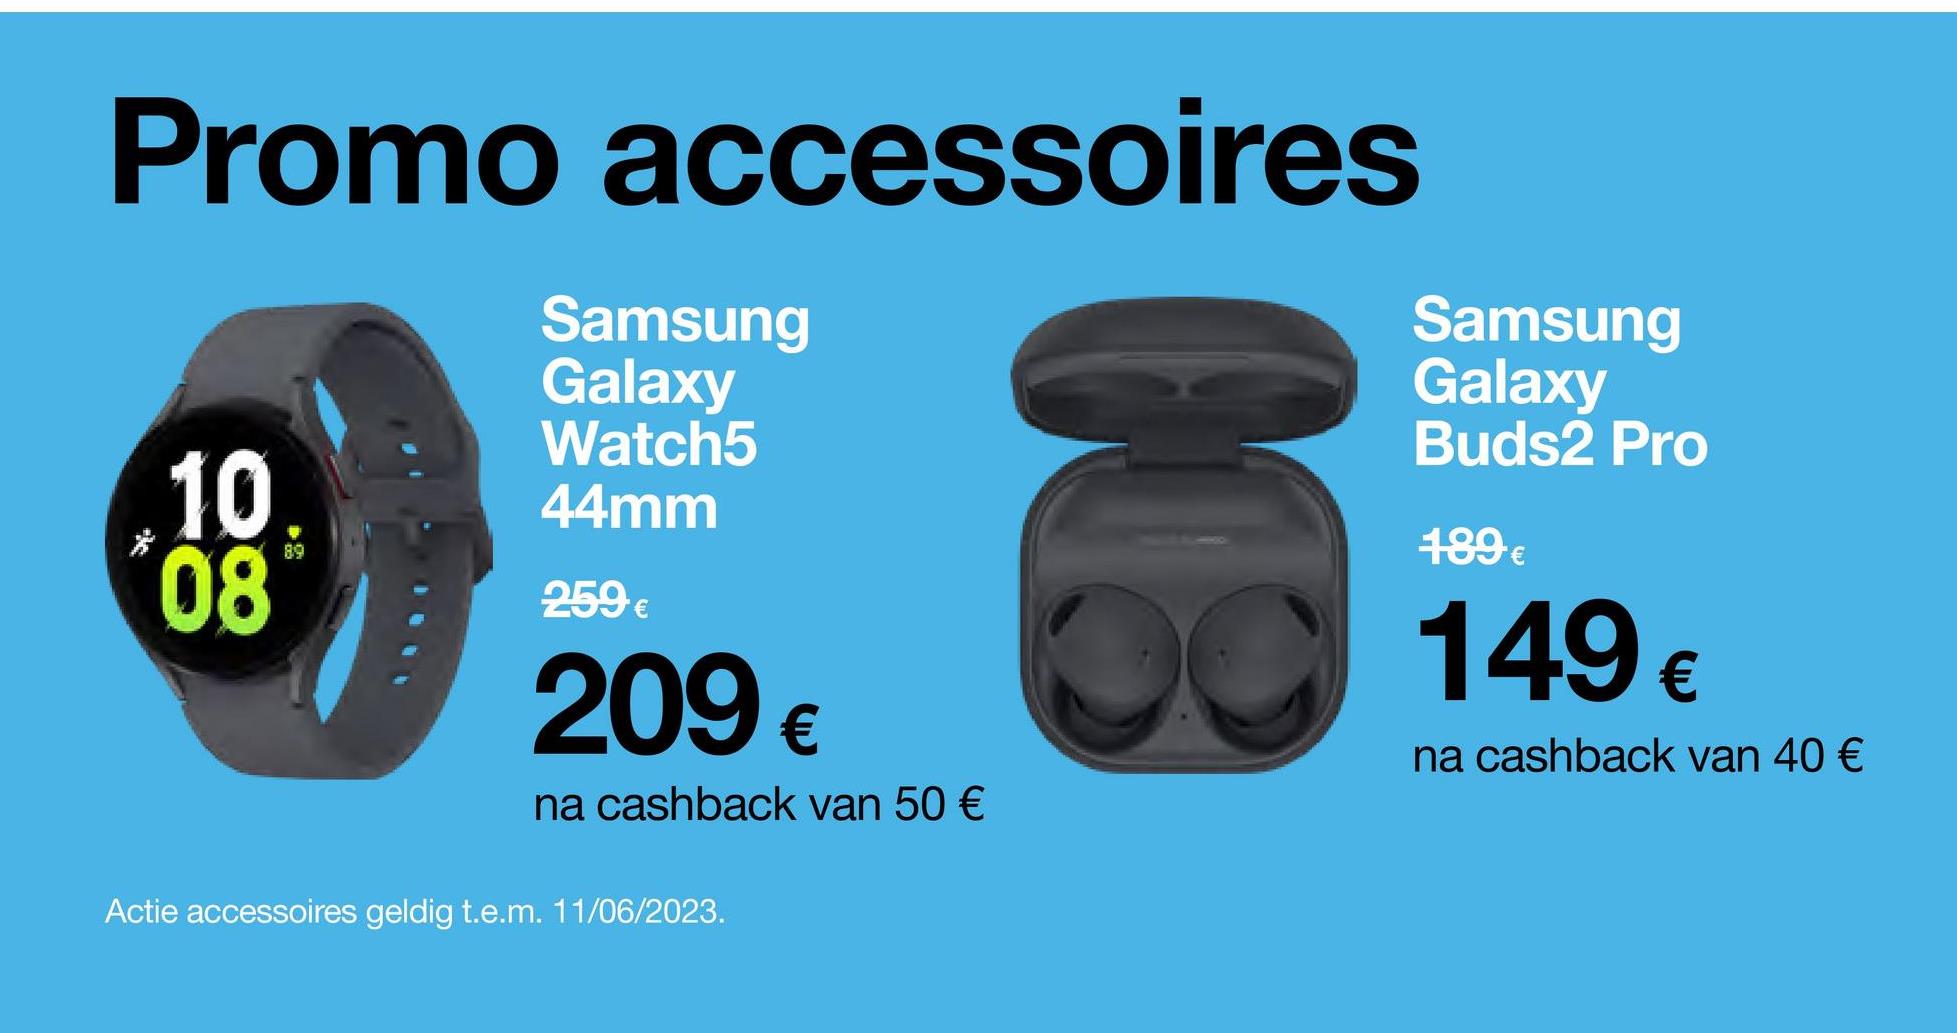 Promo accessoires
10
*08
89
Samsung
Galaxy
Watch5
44mm
259€
209 €
na cashback van 50 €
Actie accessoires geldig t.e.m. 11/06/2023.
Samsung
Galaxy
Buds2 Pro
189 €
149 €
na cashback van 40 €